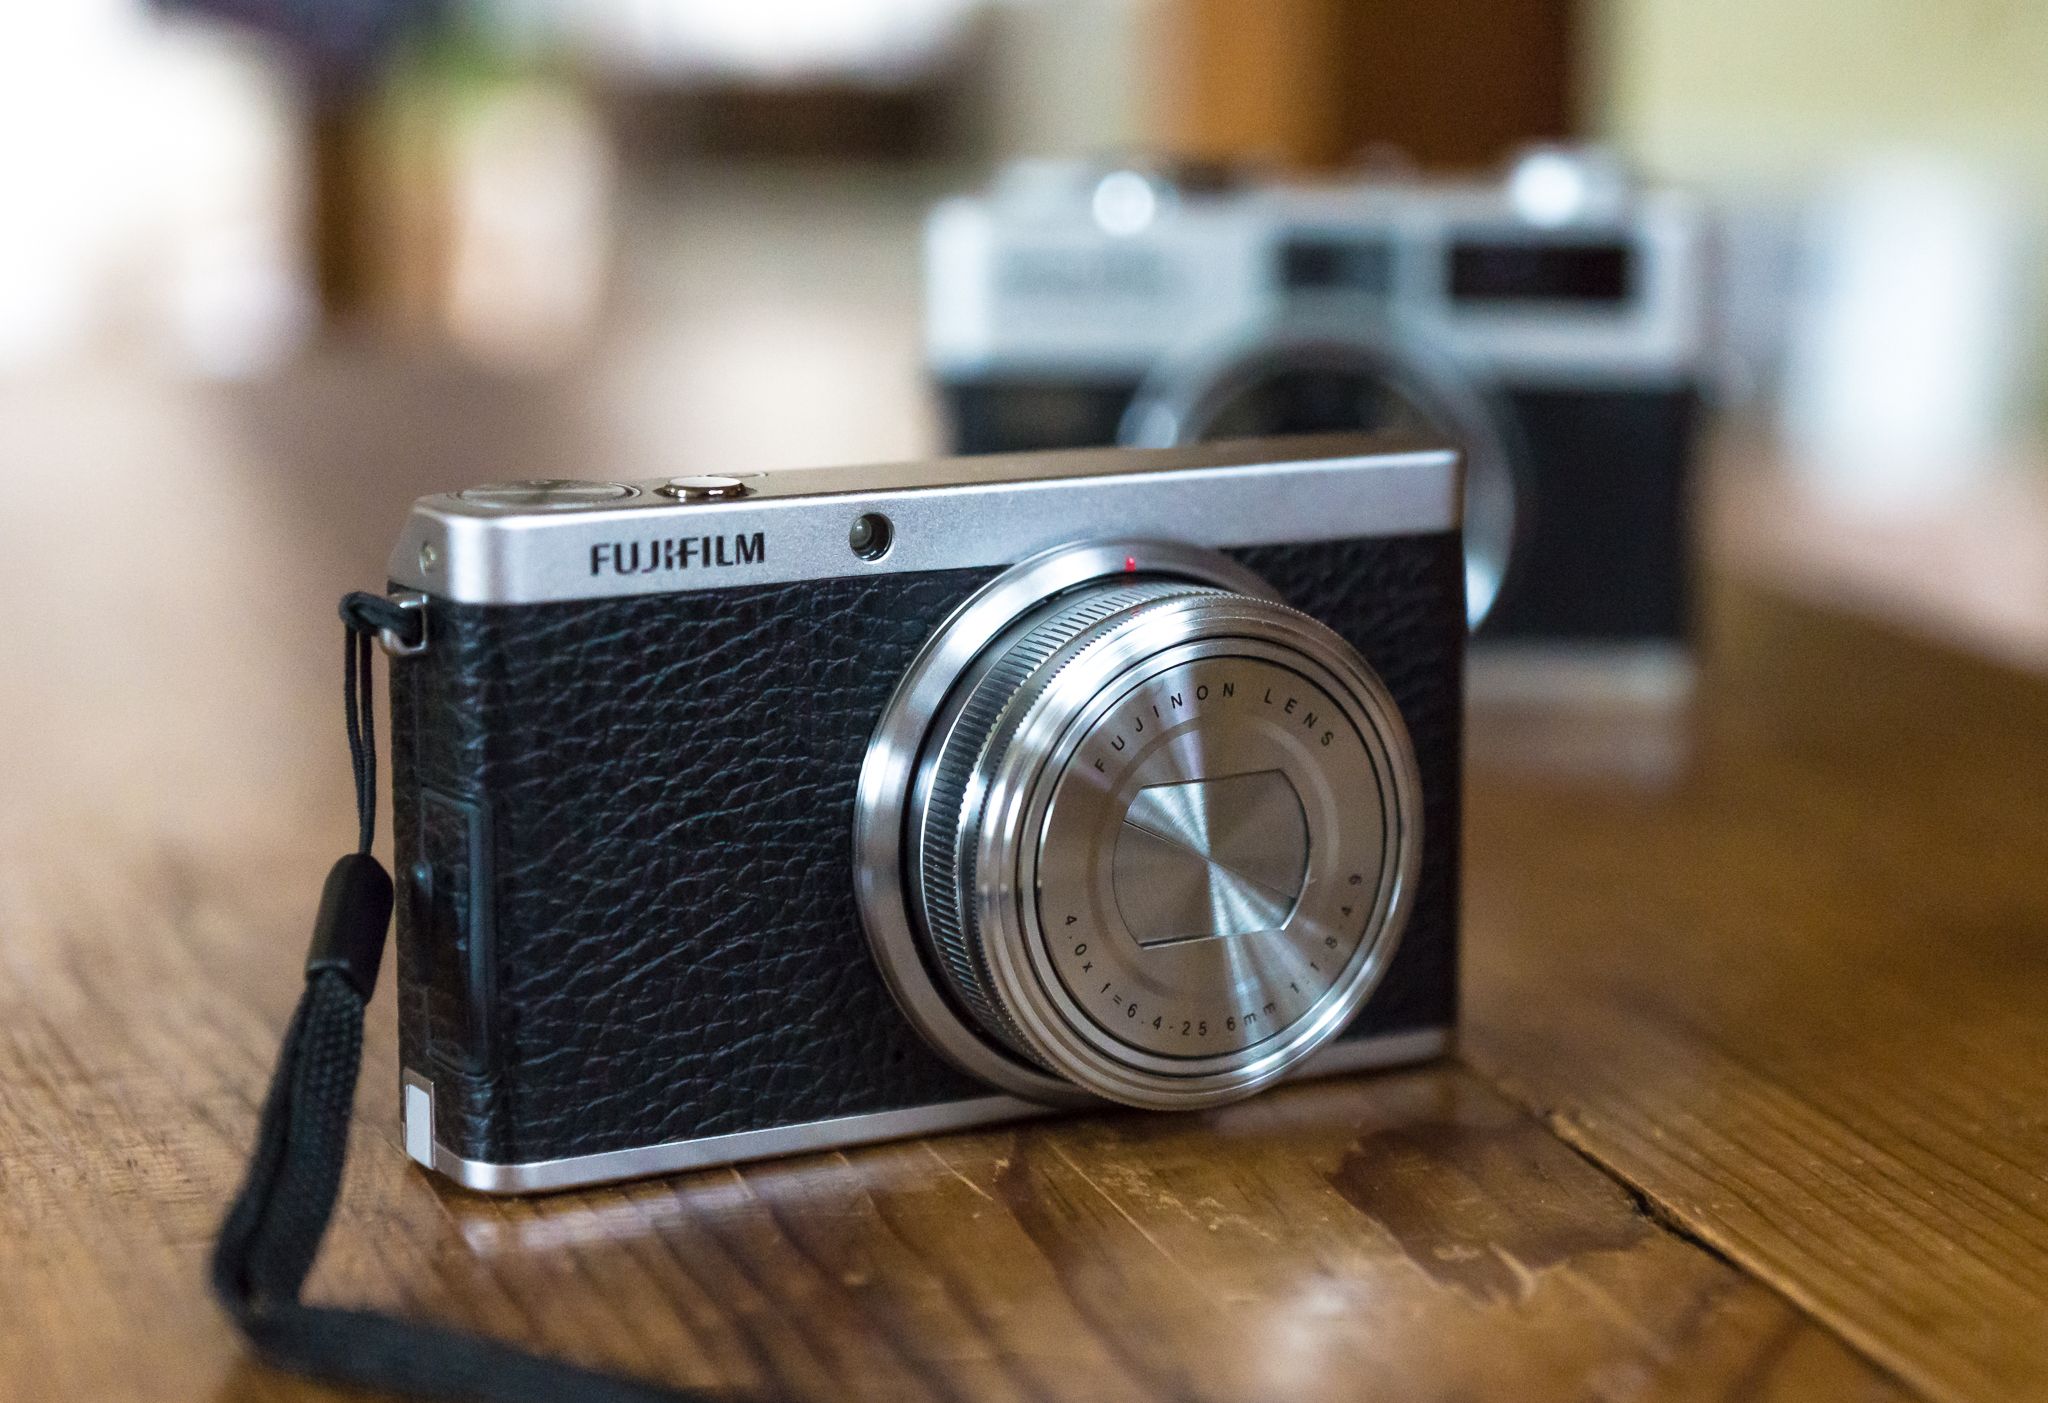 Fujifilm XF1: A Stylish Compact Camera